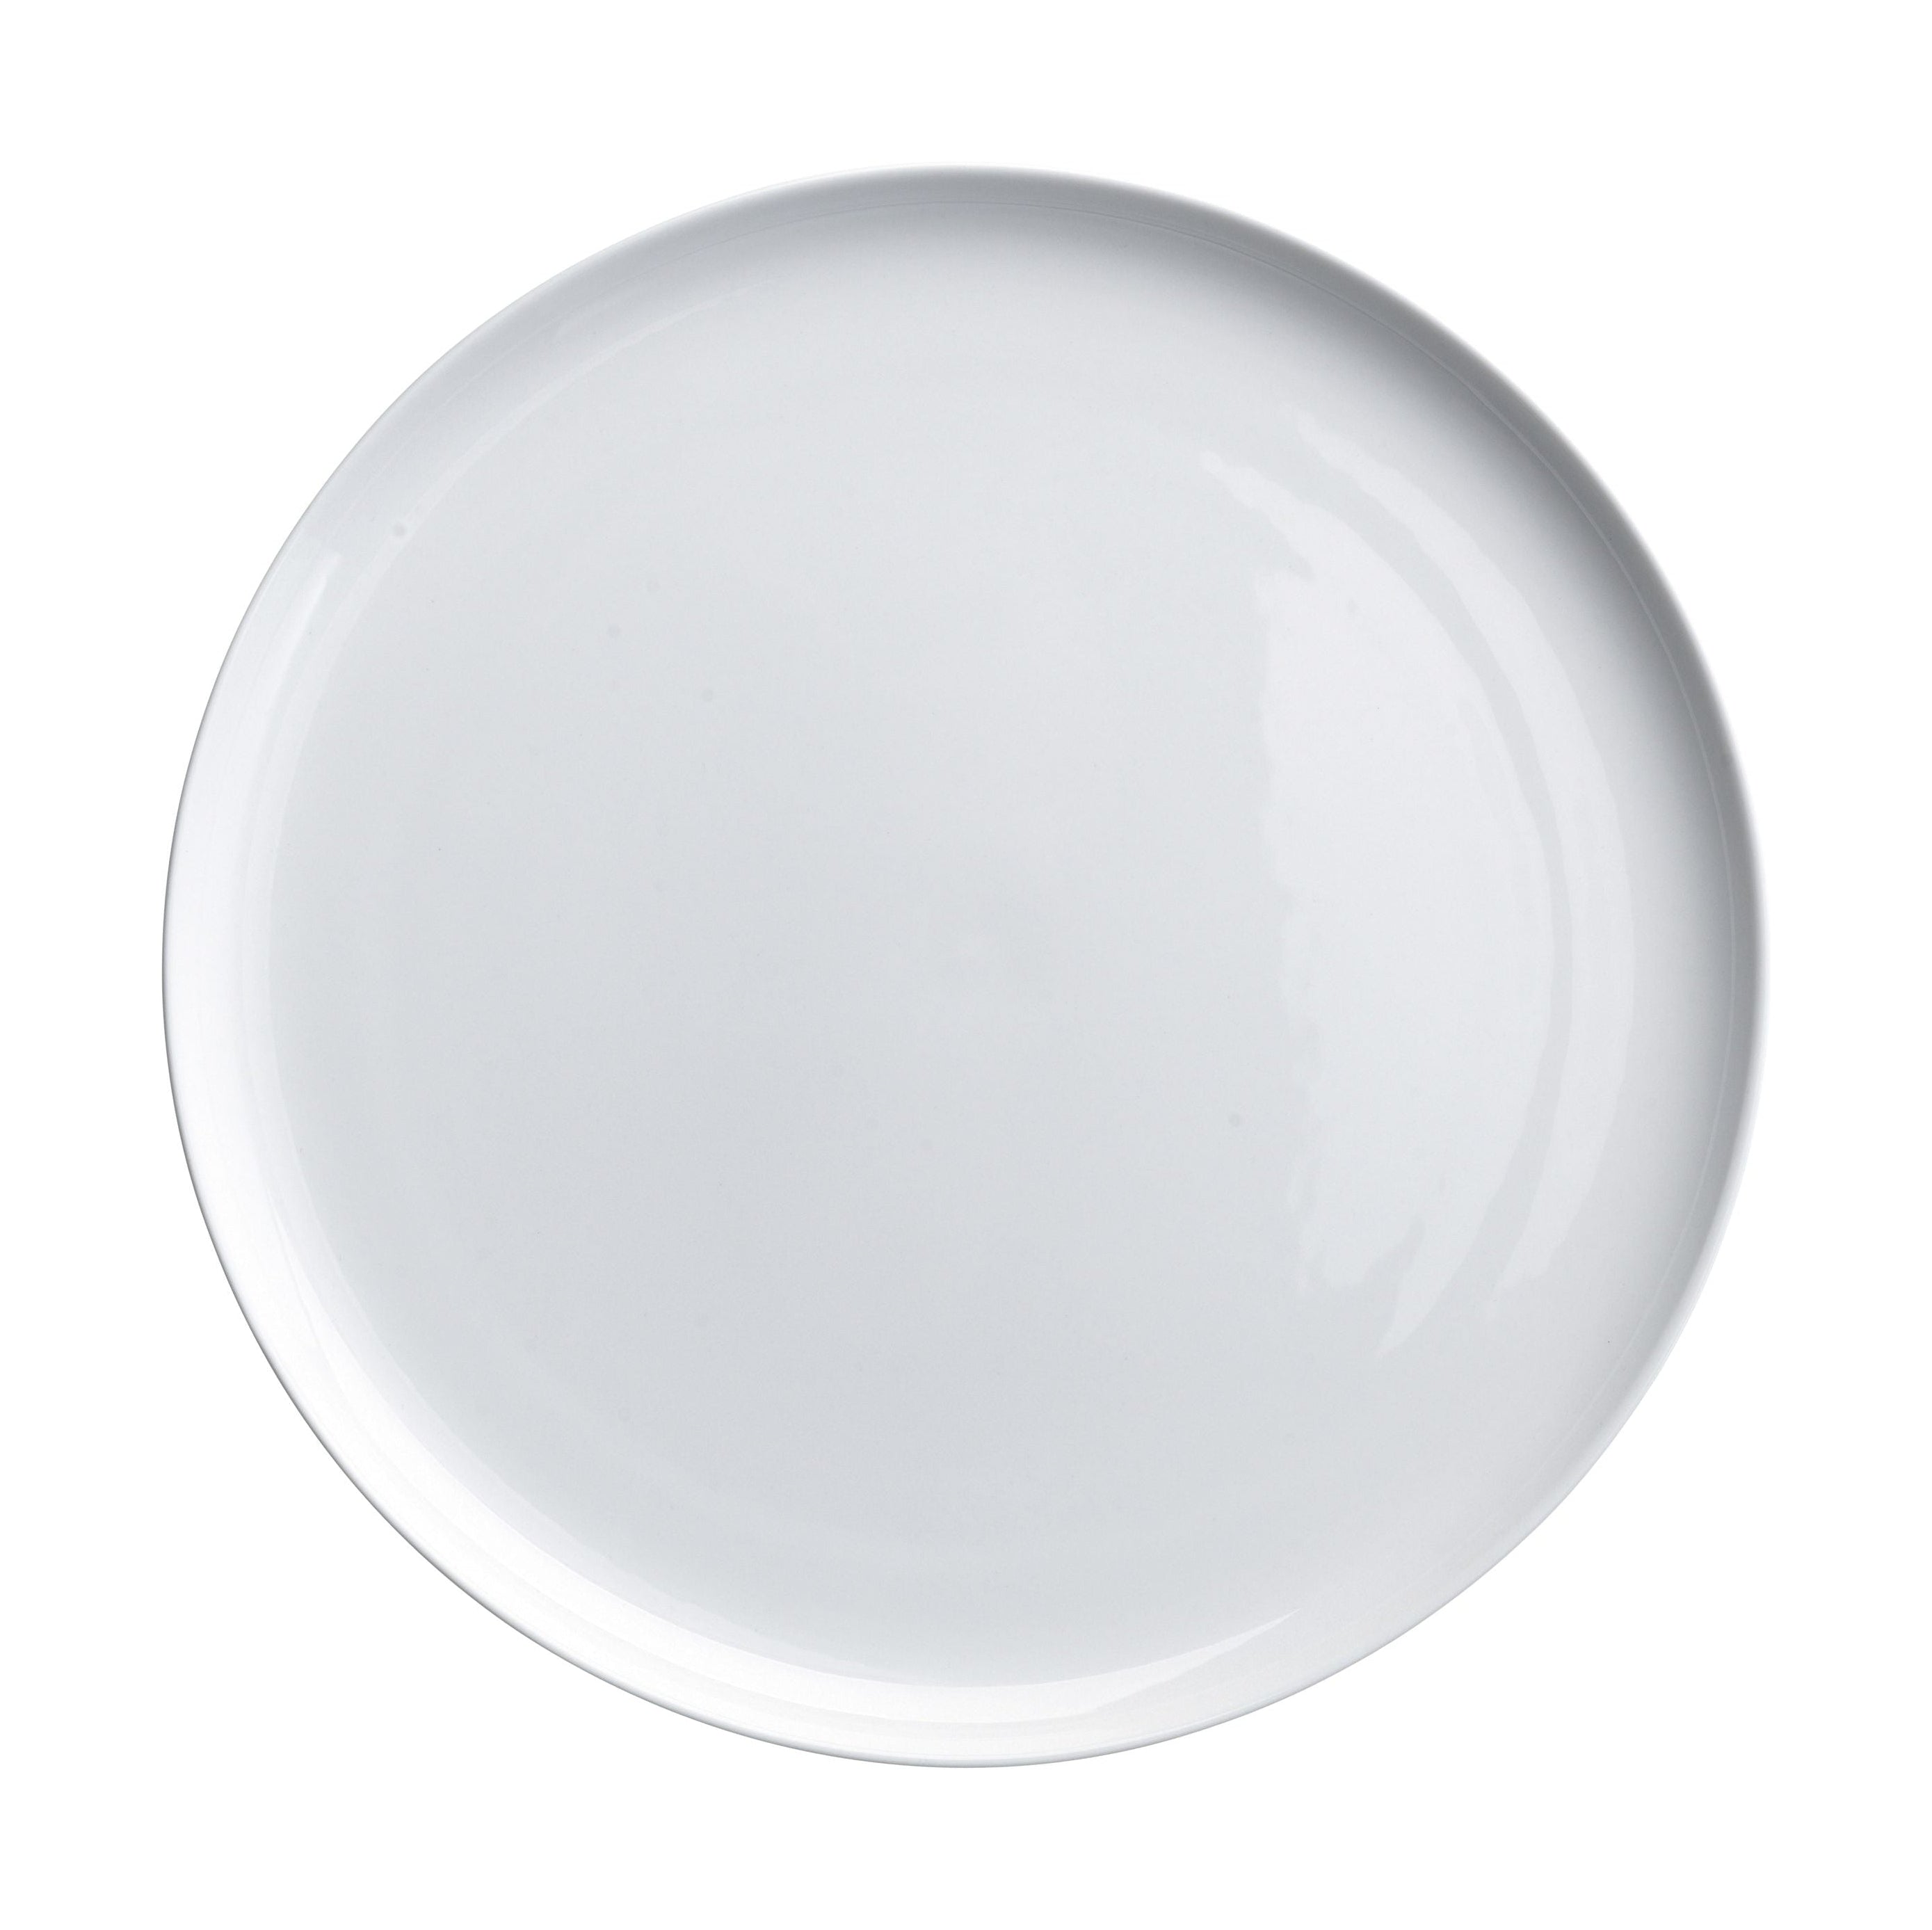 Rörstrand Inwhite Flat Plate, 27 Cm